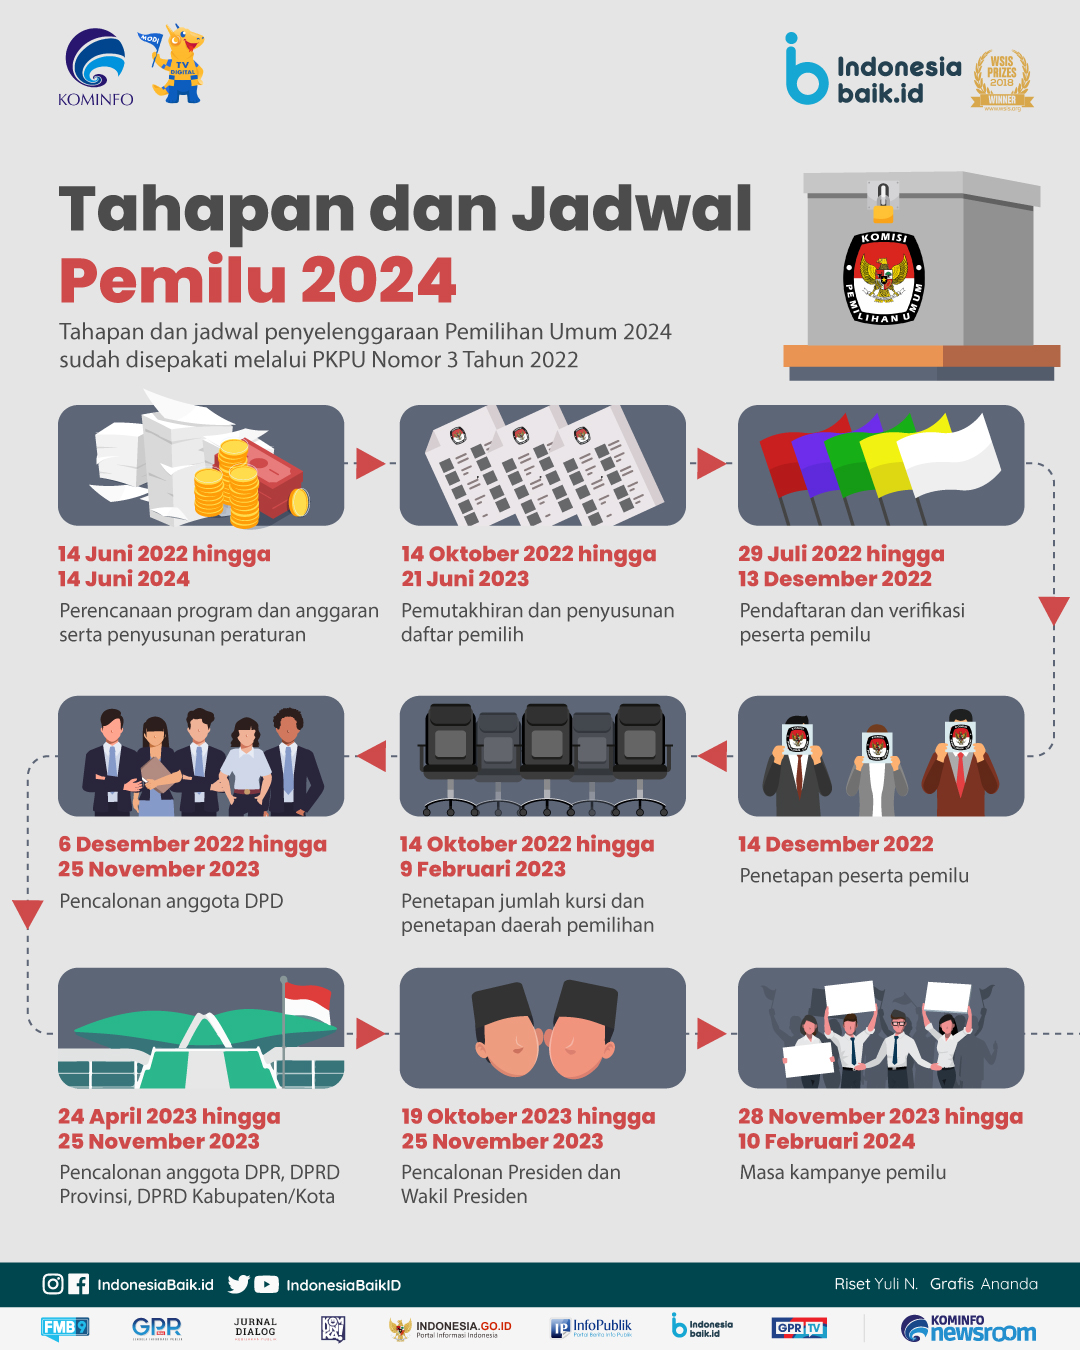 INDONESIA Road To 2024 General Election Menuju Pemilu 2024